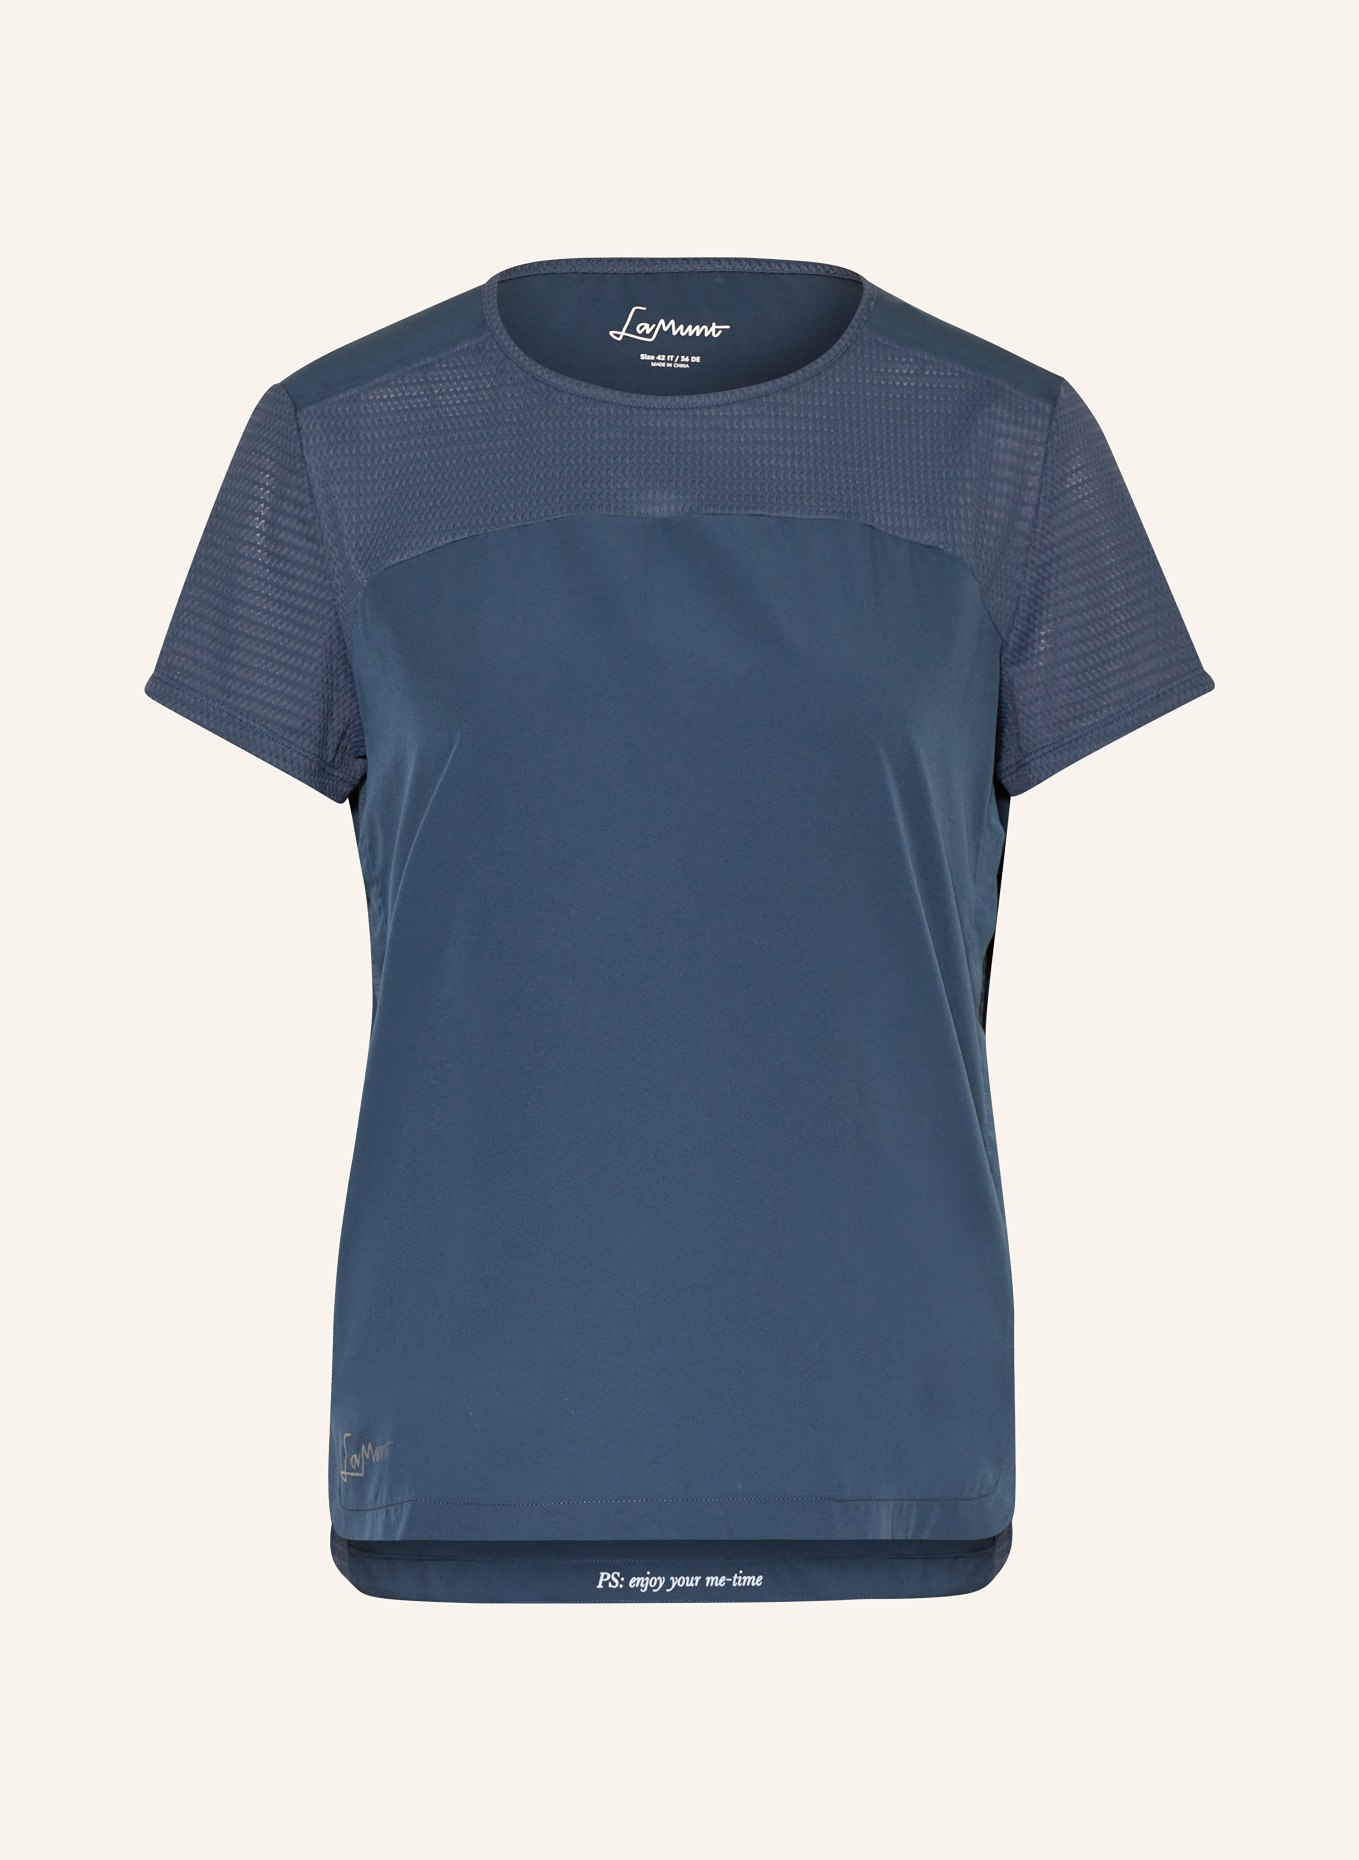 LaMunt T-Shirt TERESA, Farbe: BLAUGRAU (Bild 1)